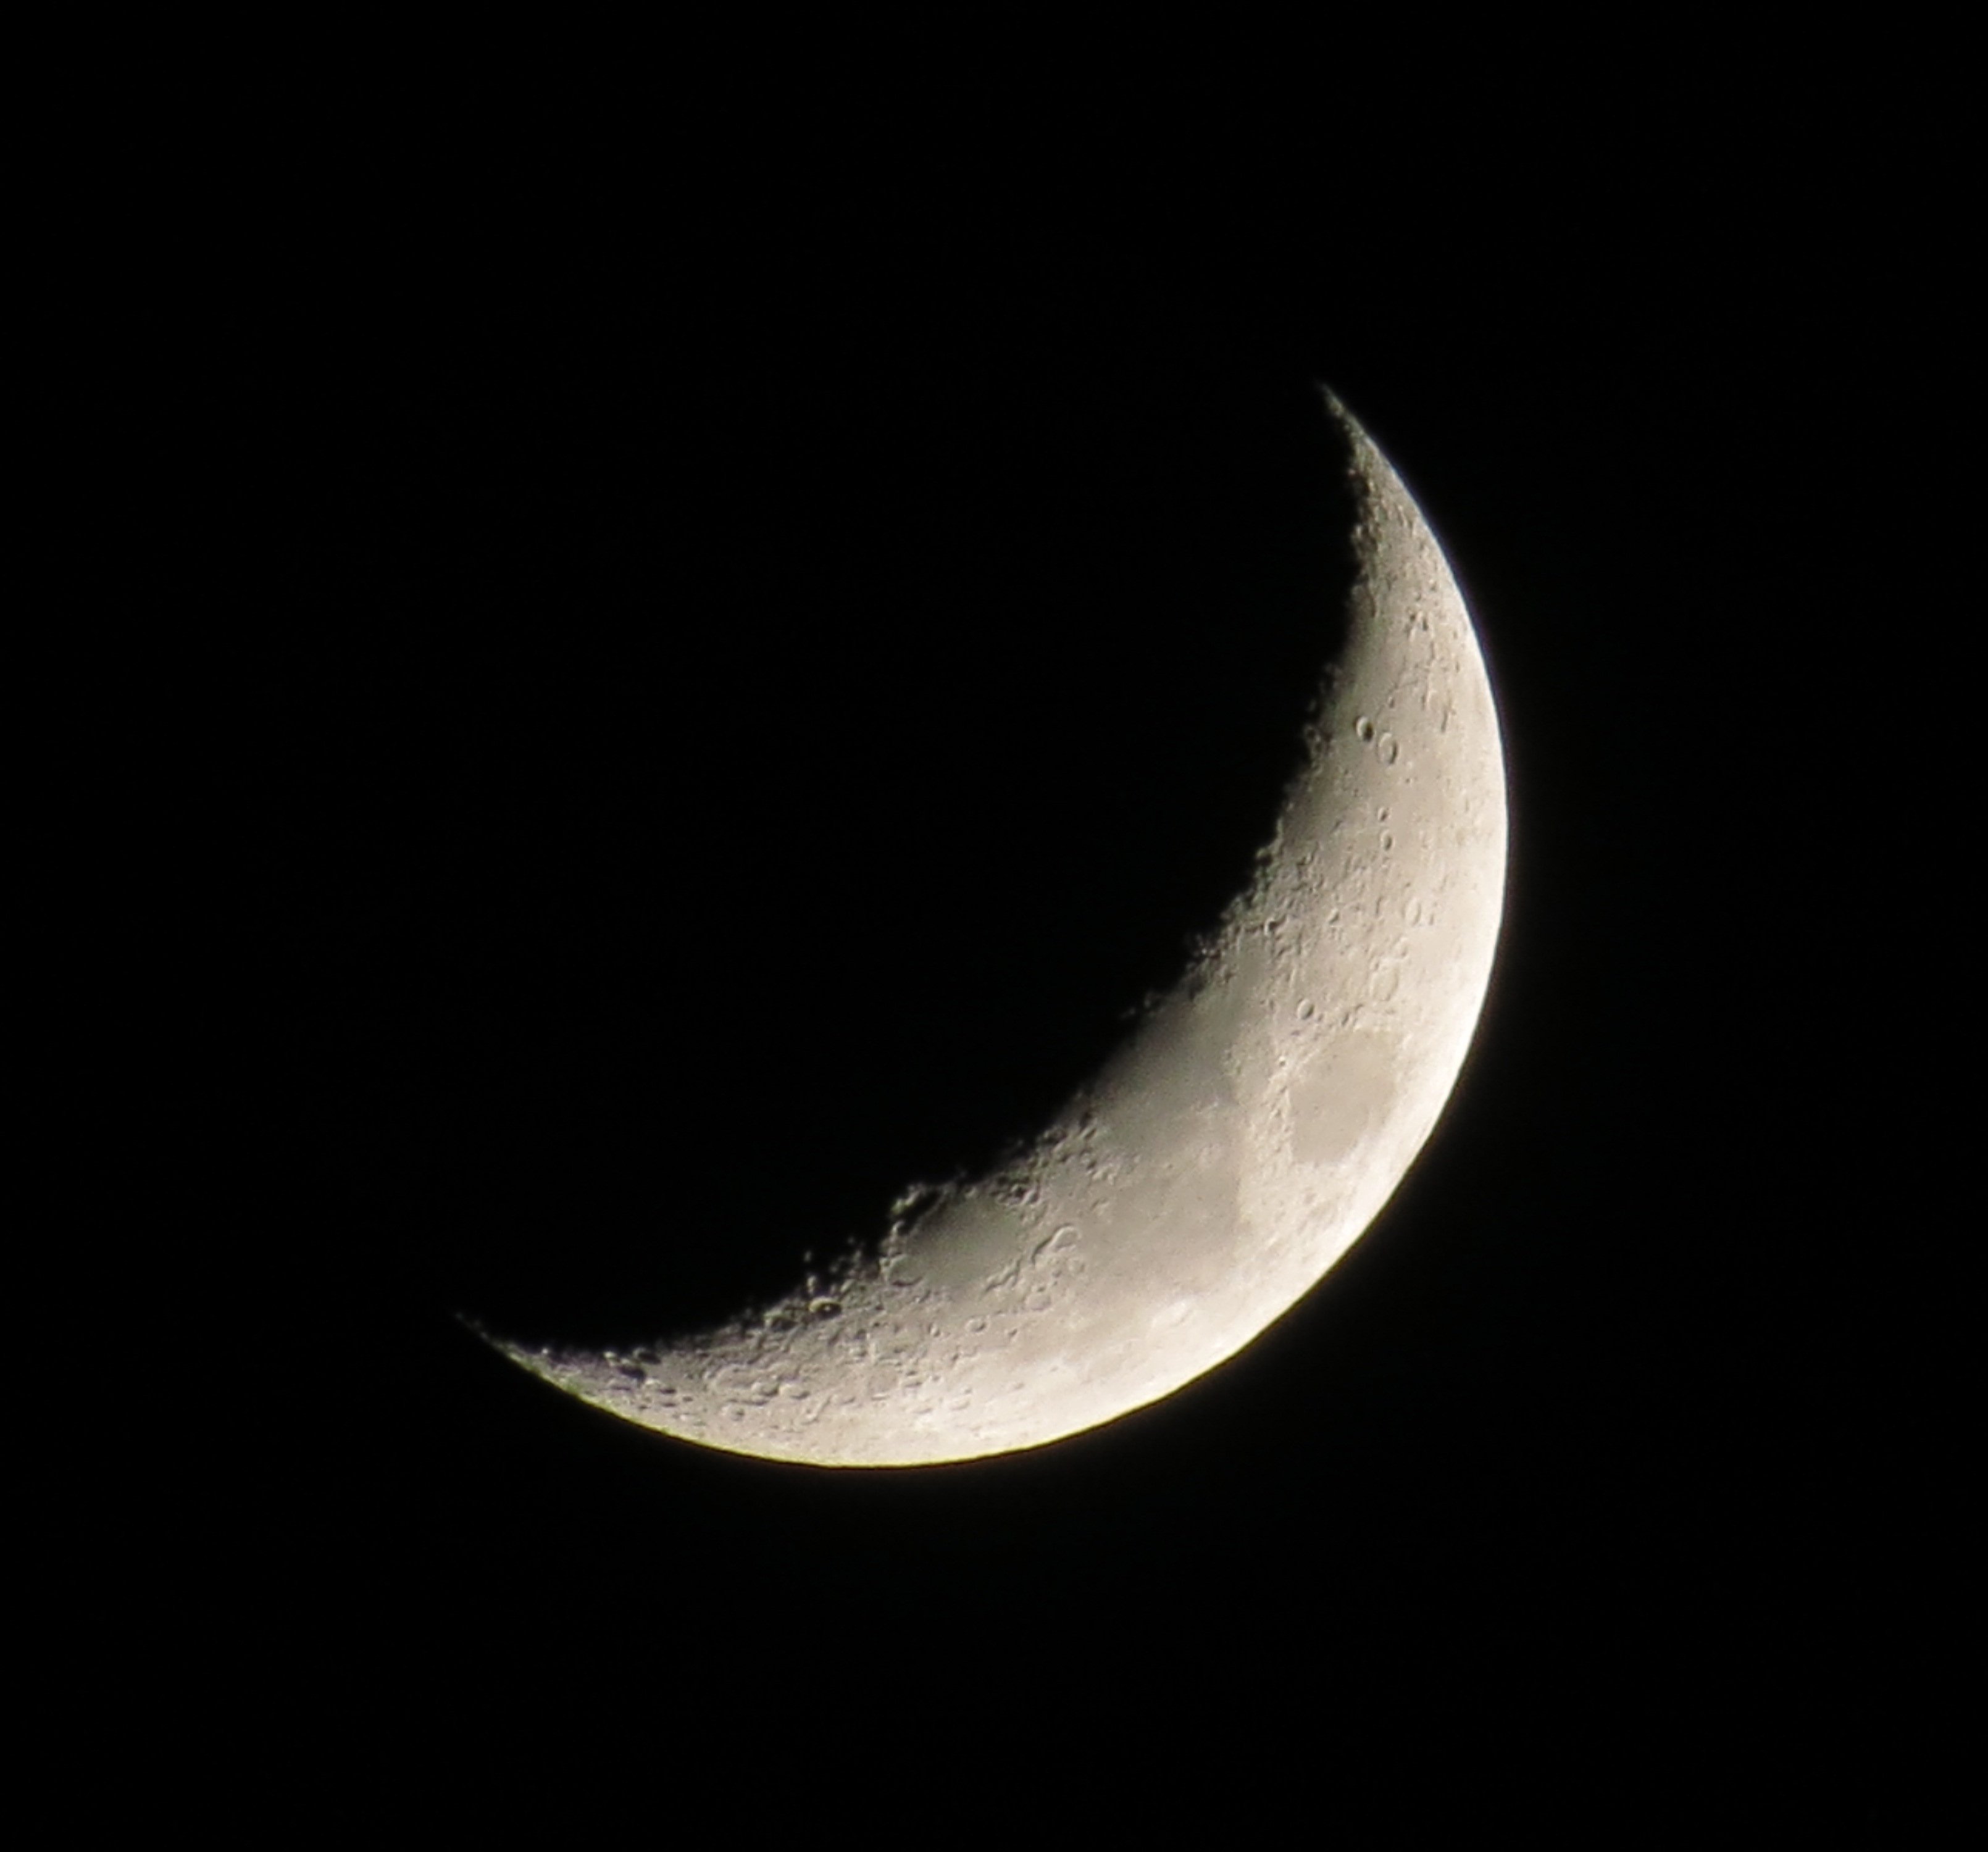 Photograph of a crescent moon. | Photo: Shutterstock